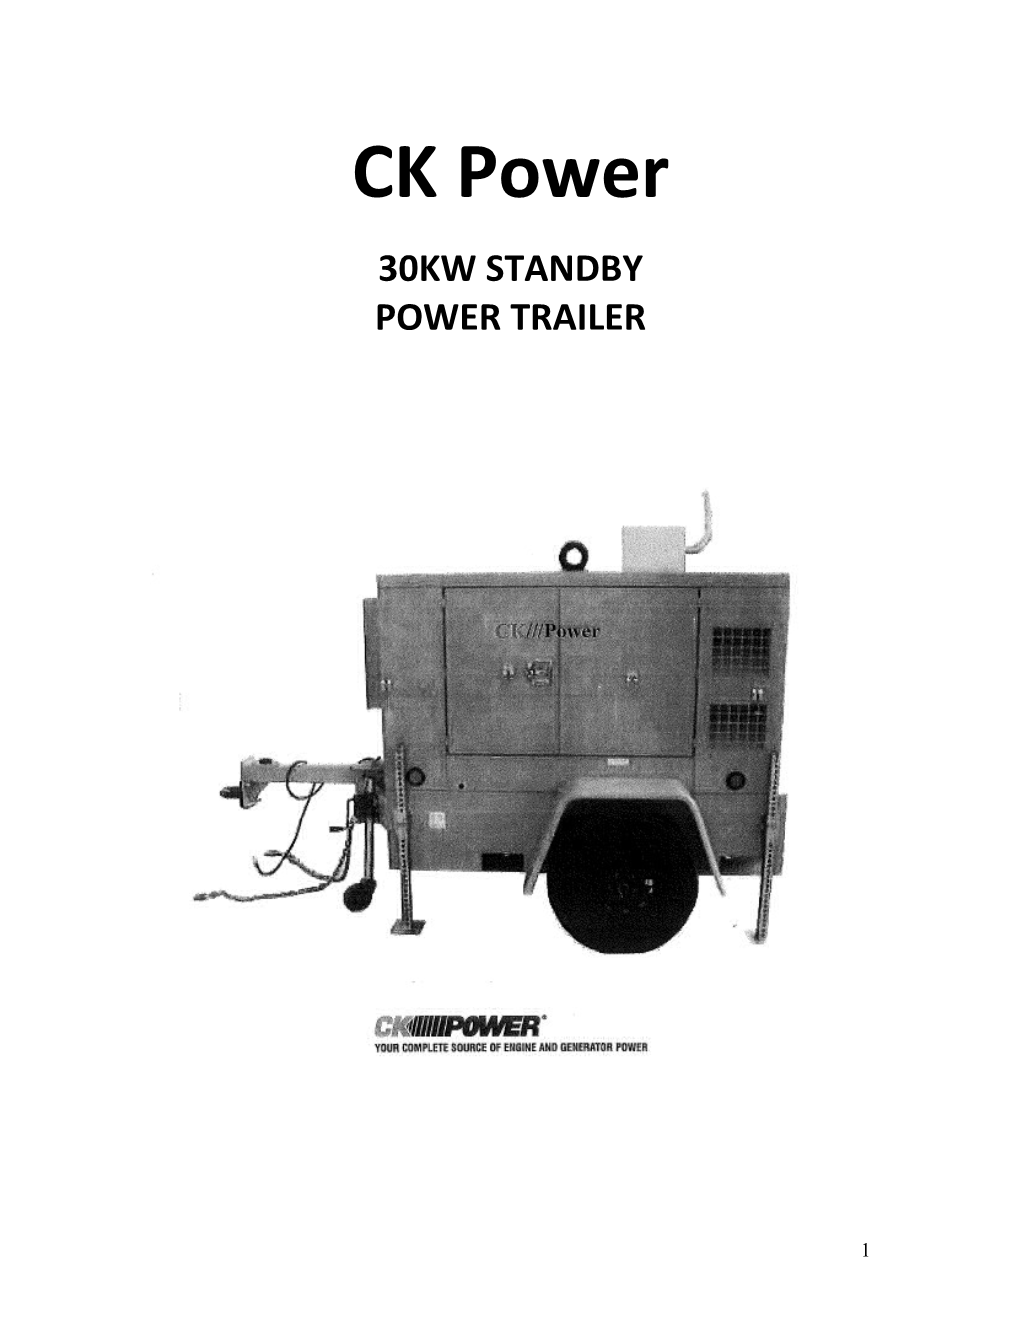 Power Trailer